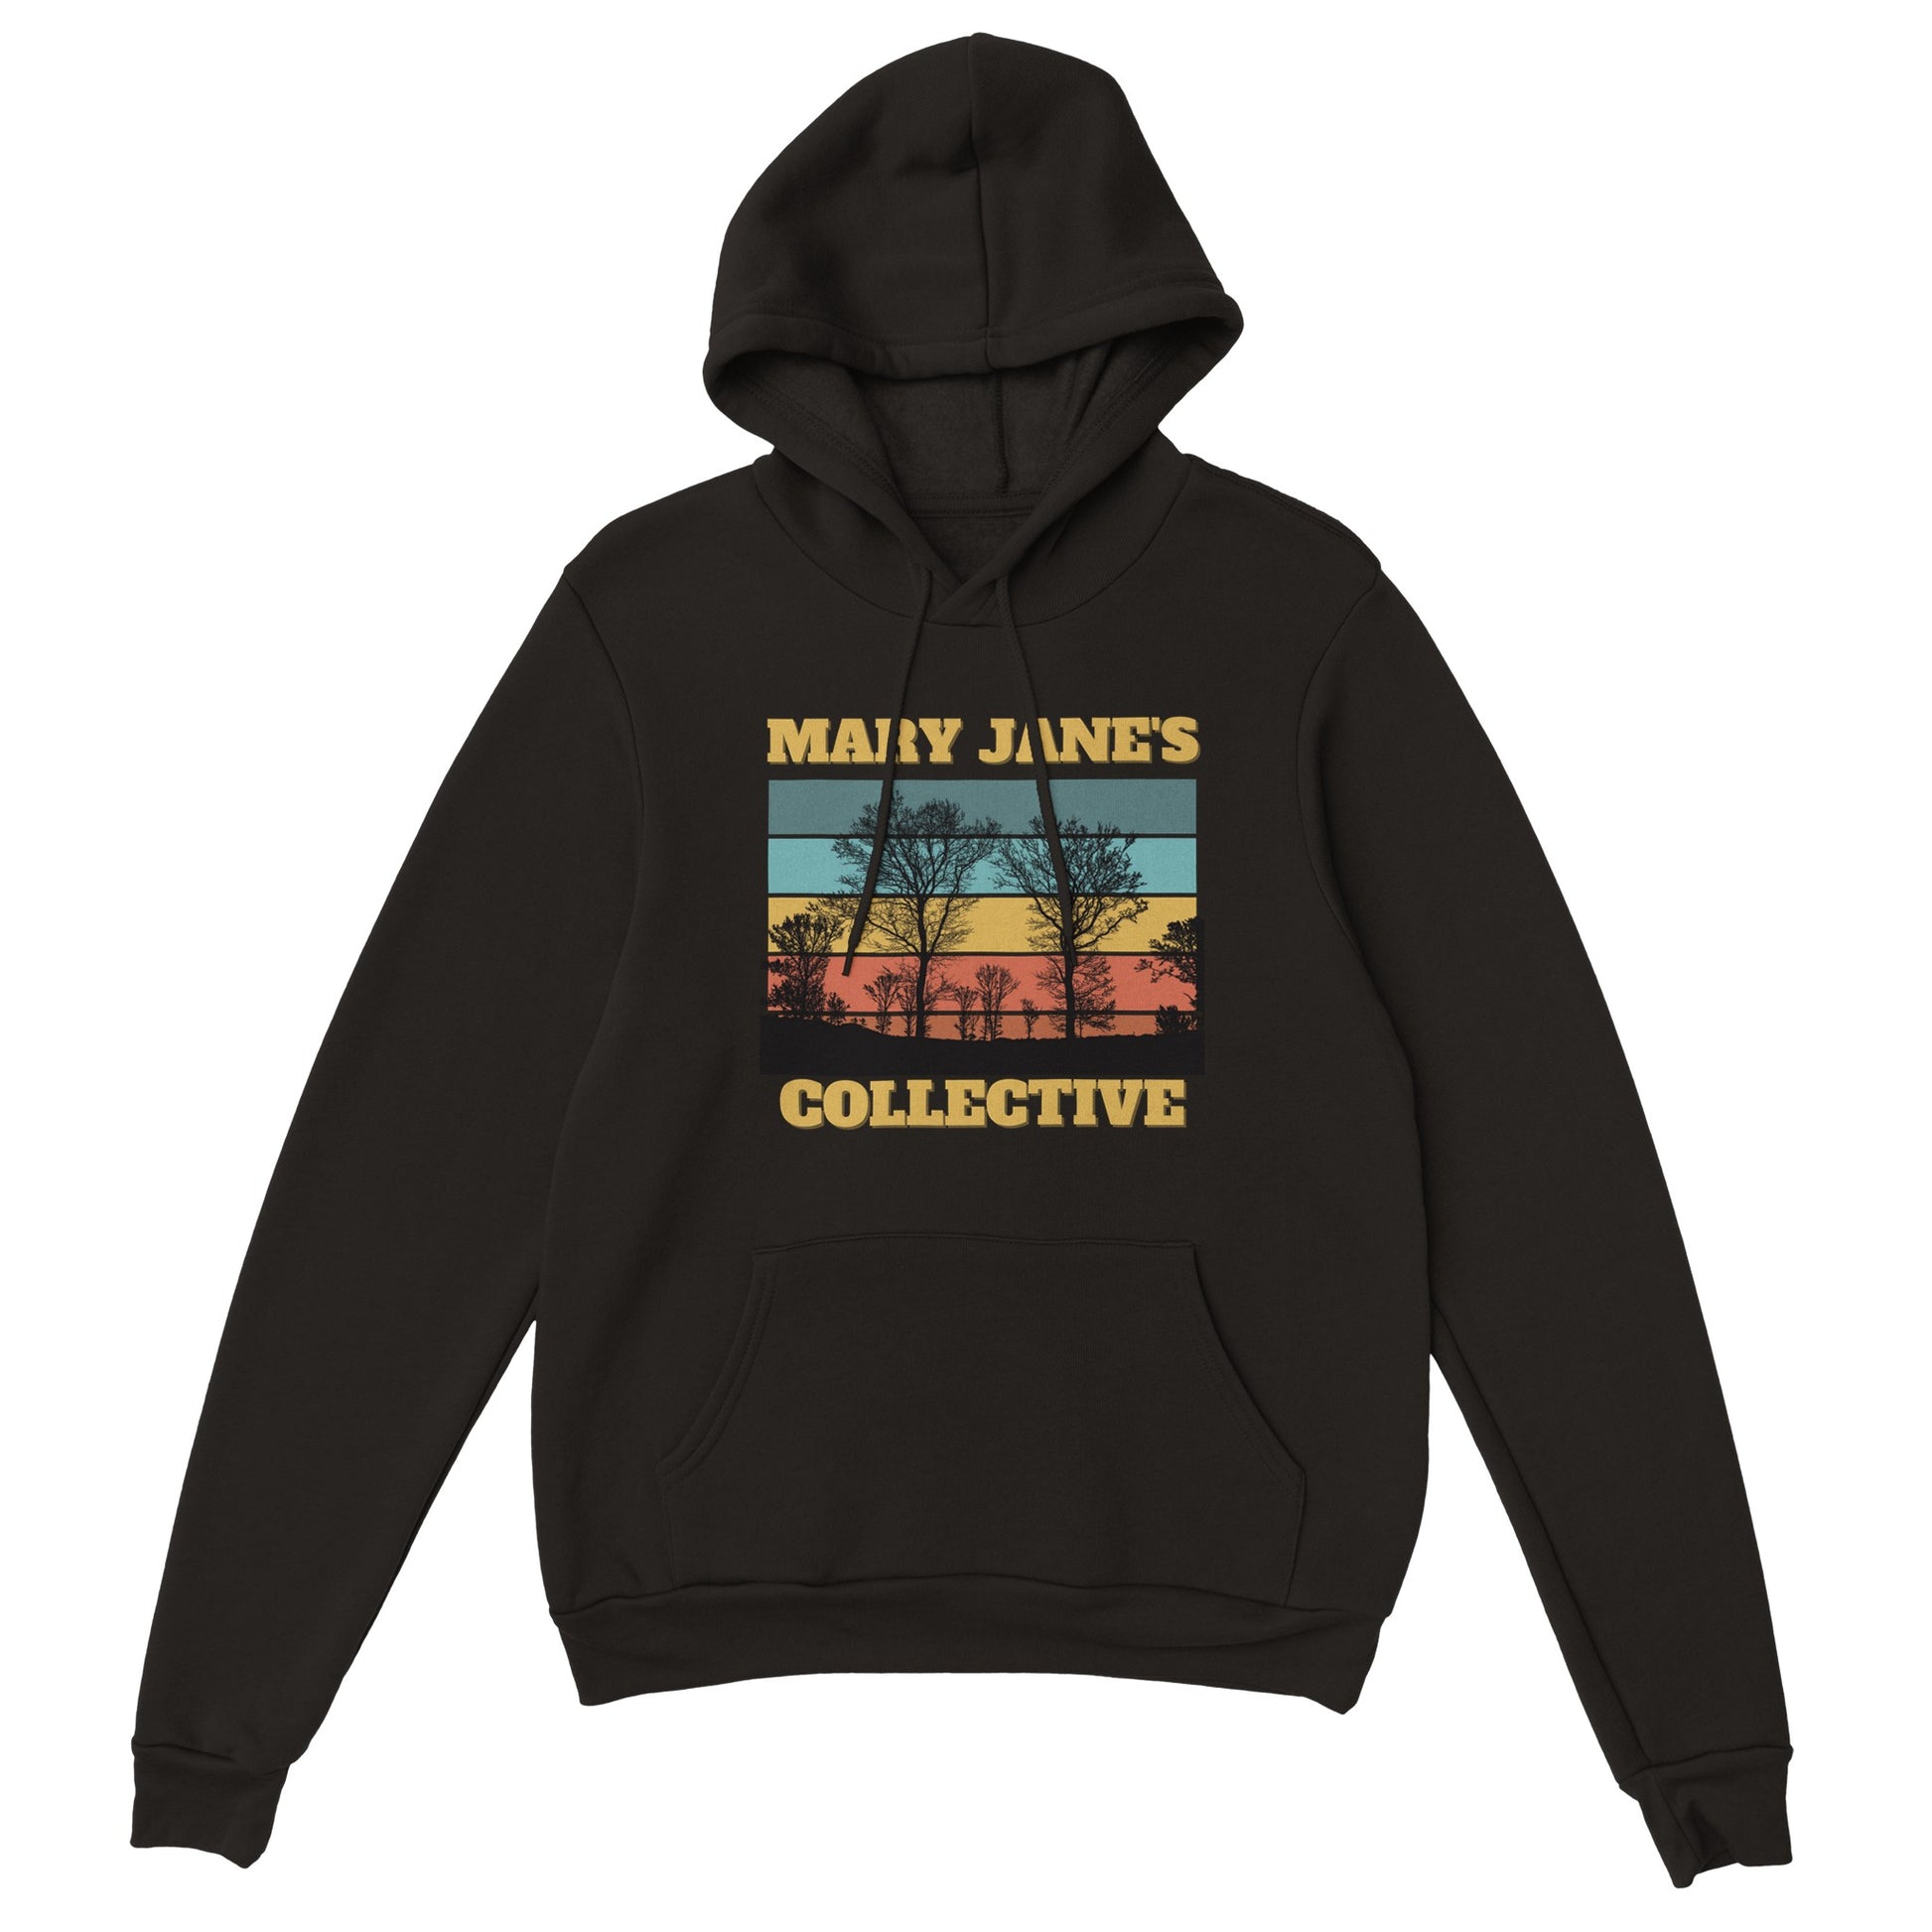 Mary Jane's Collective hoodie dankweedtees